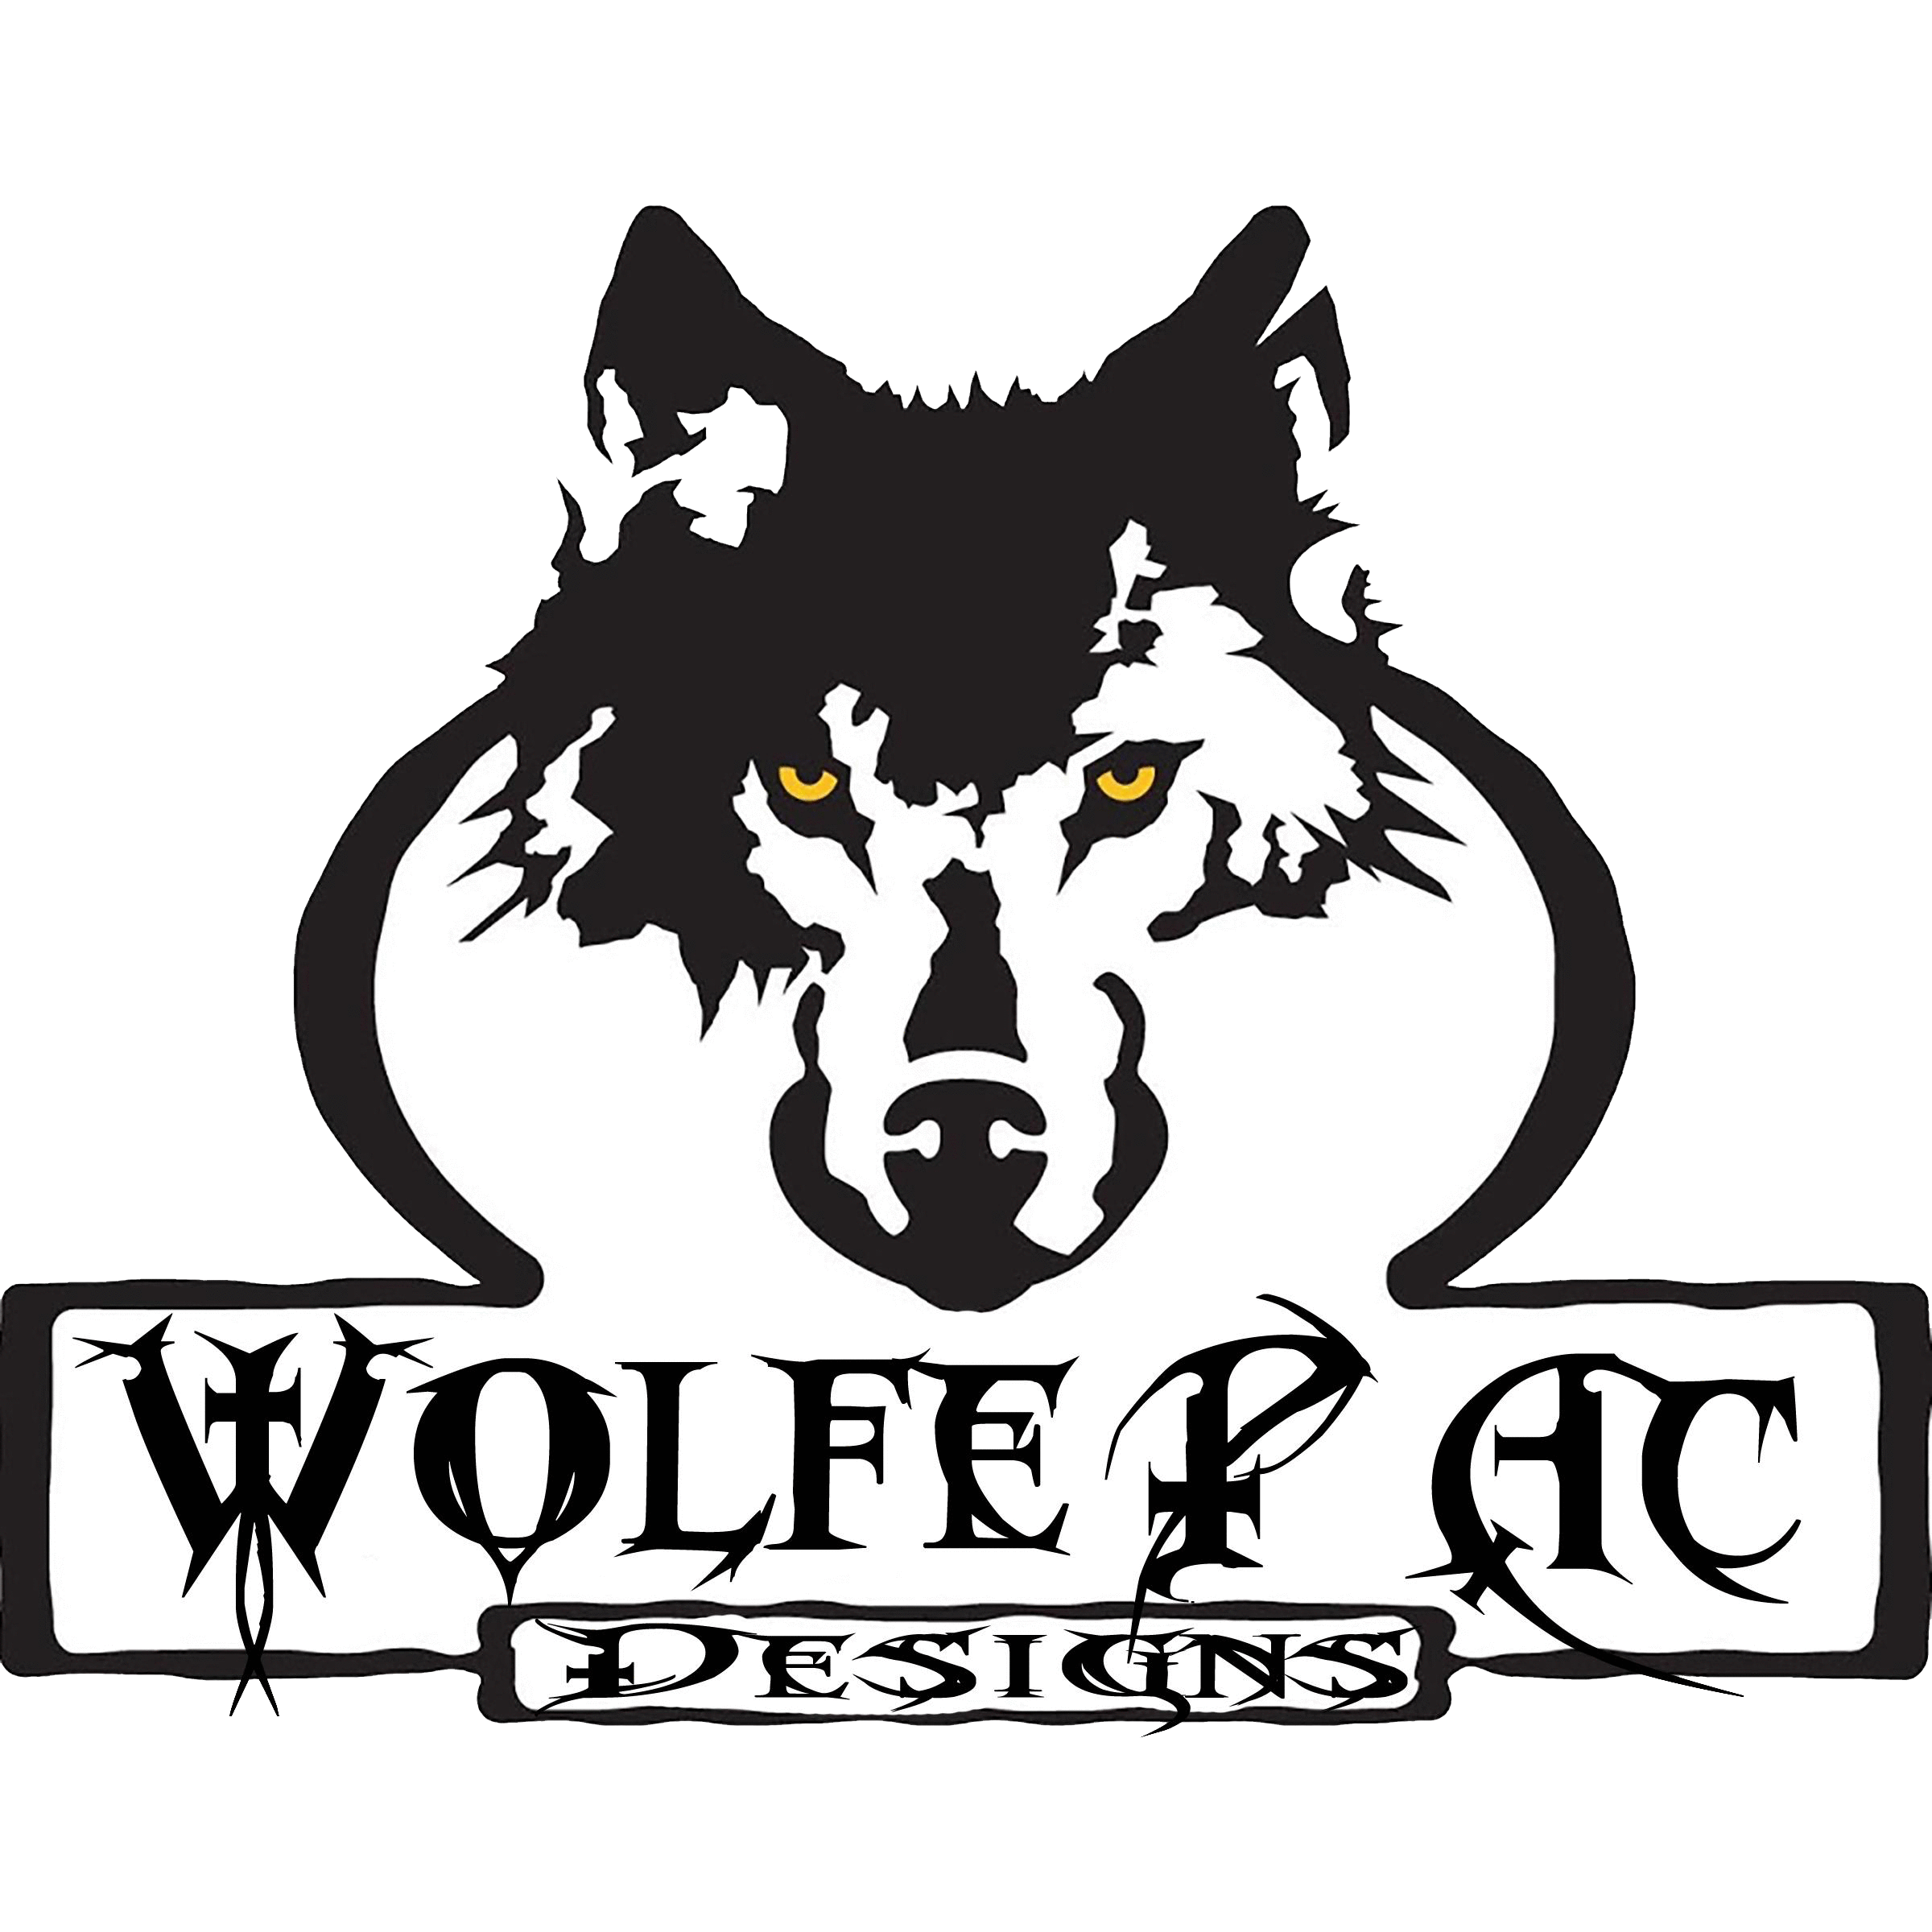 Wolfe Pak Design